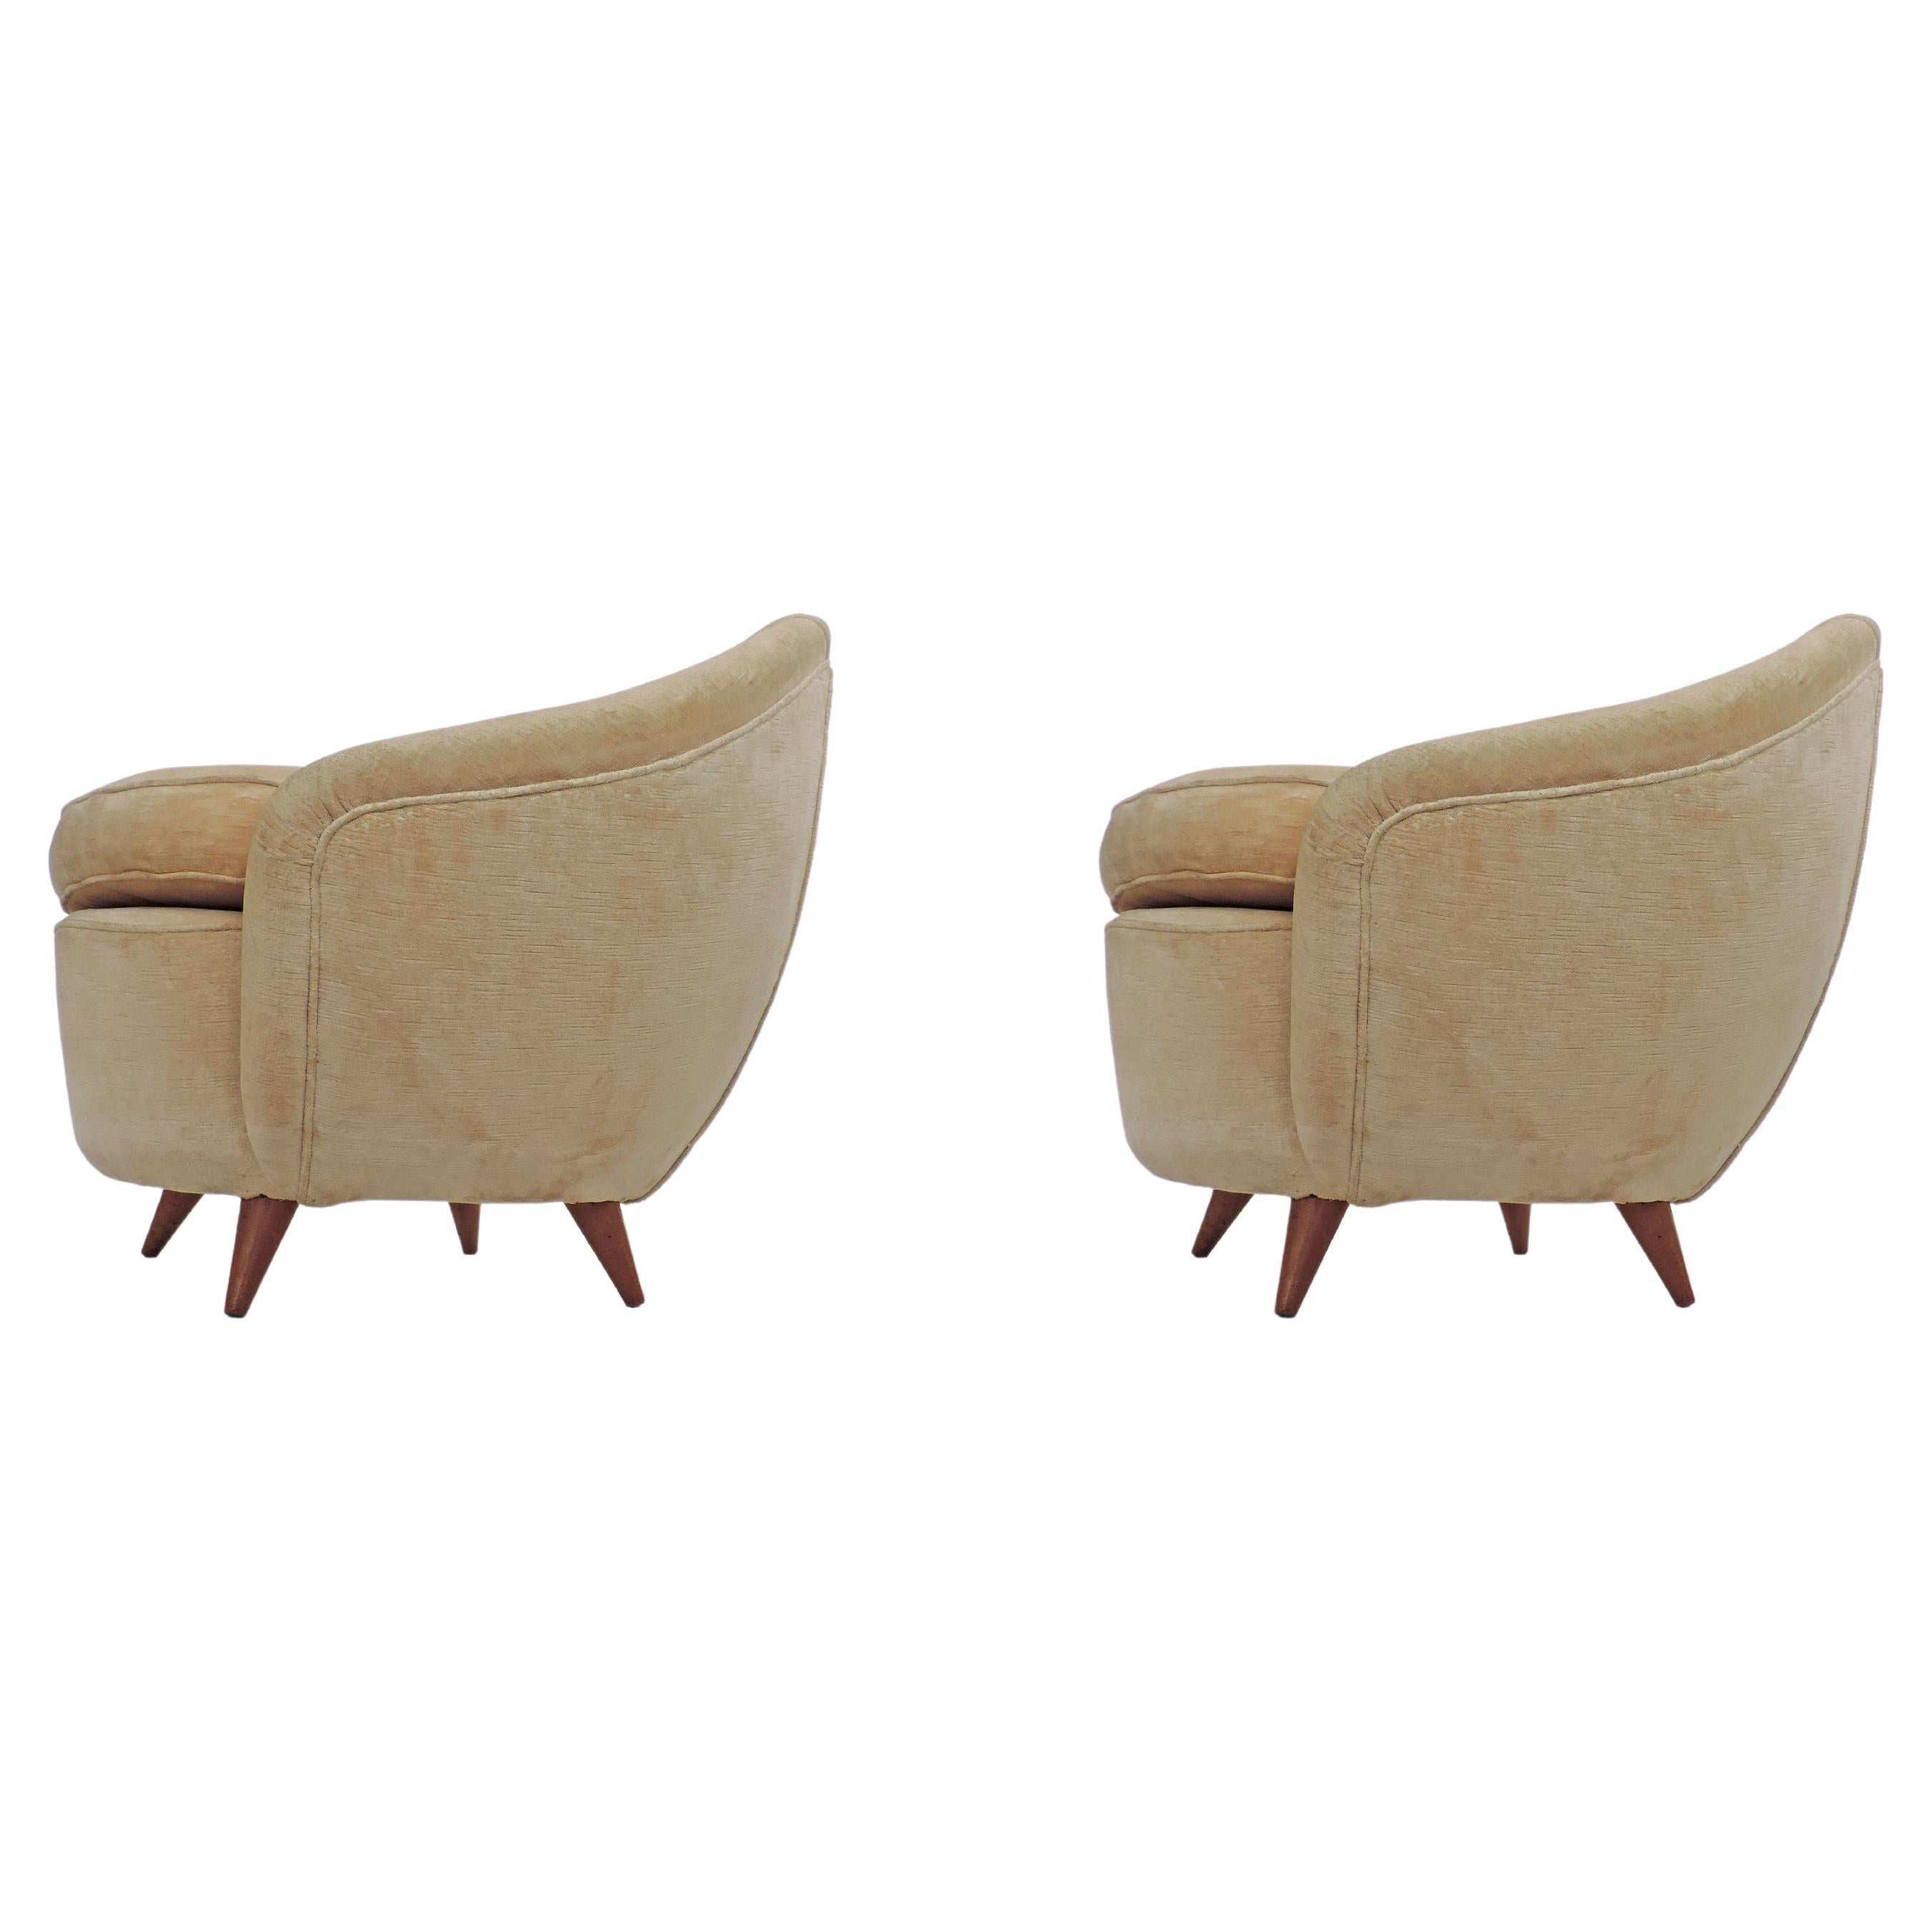 Splendid Pair of Italian 1940s Lounge Chairs